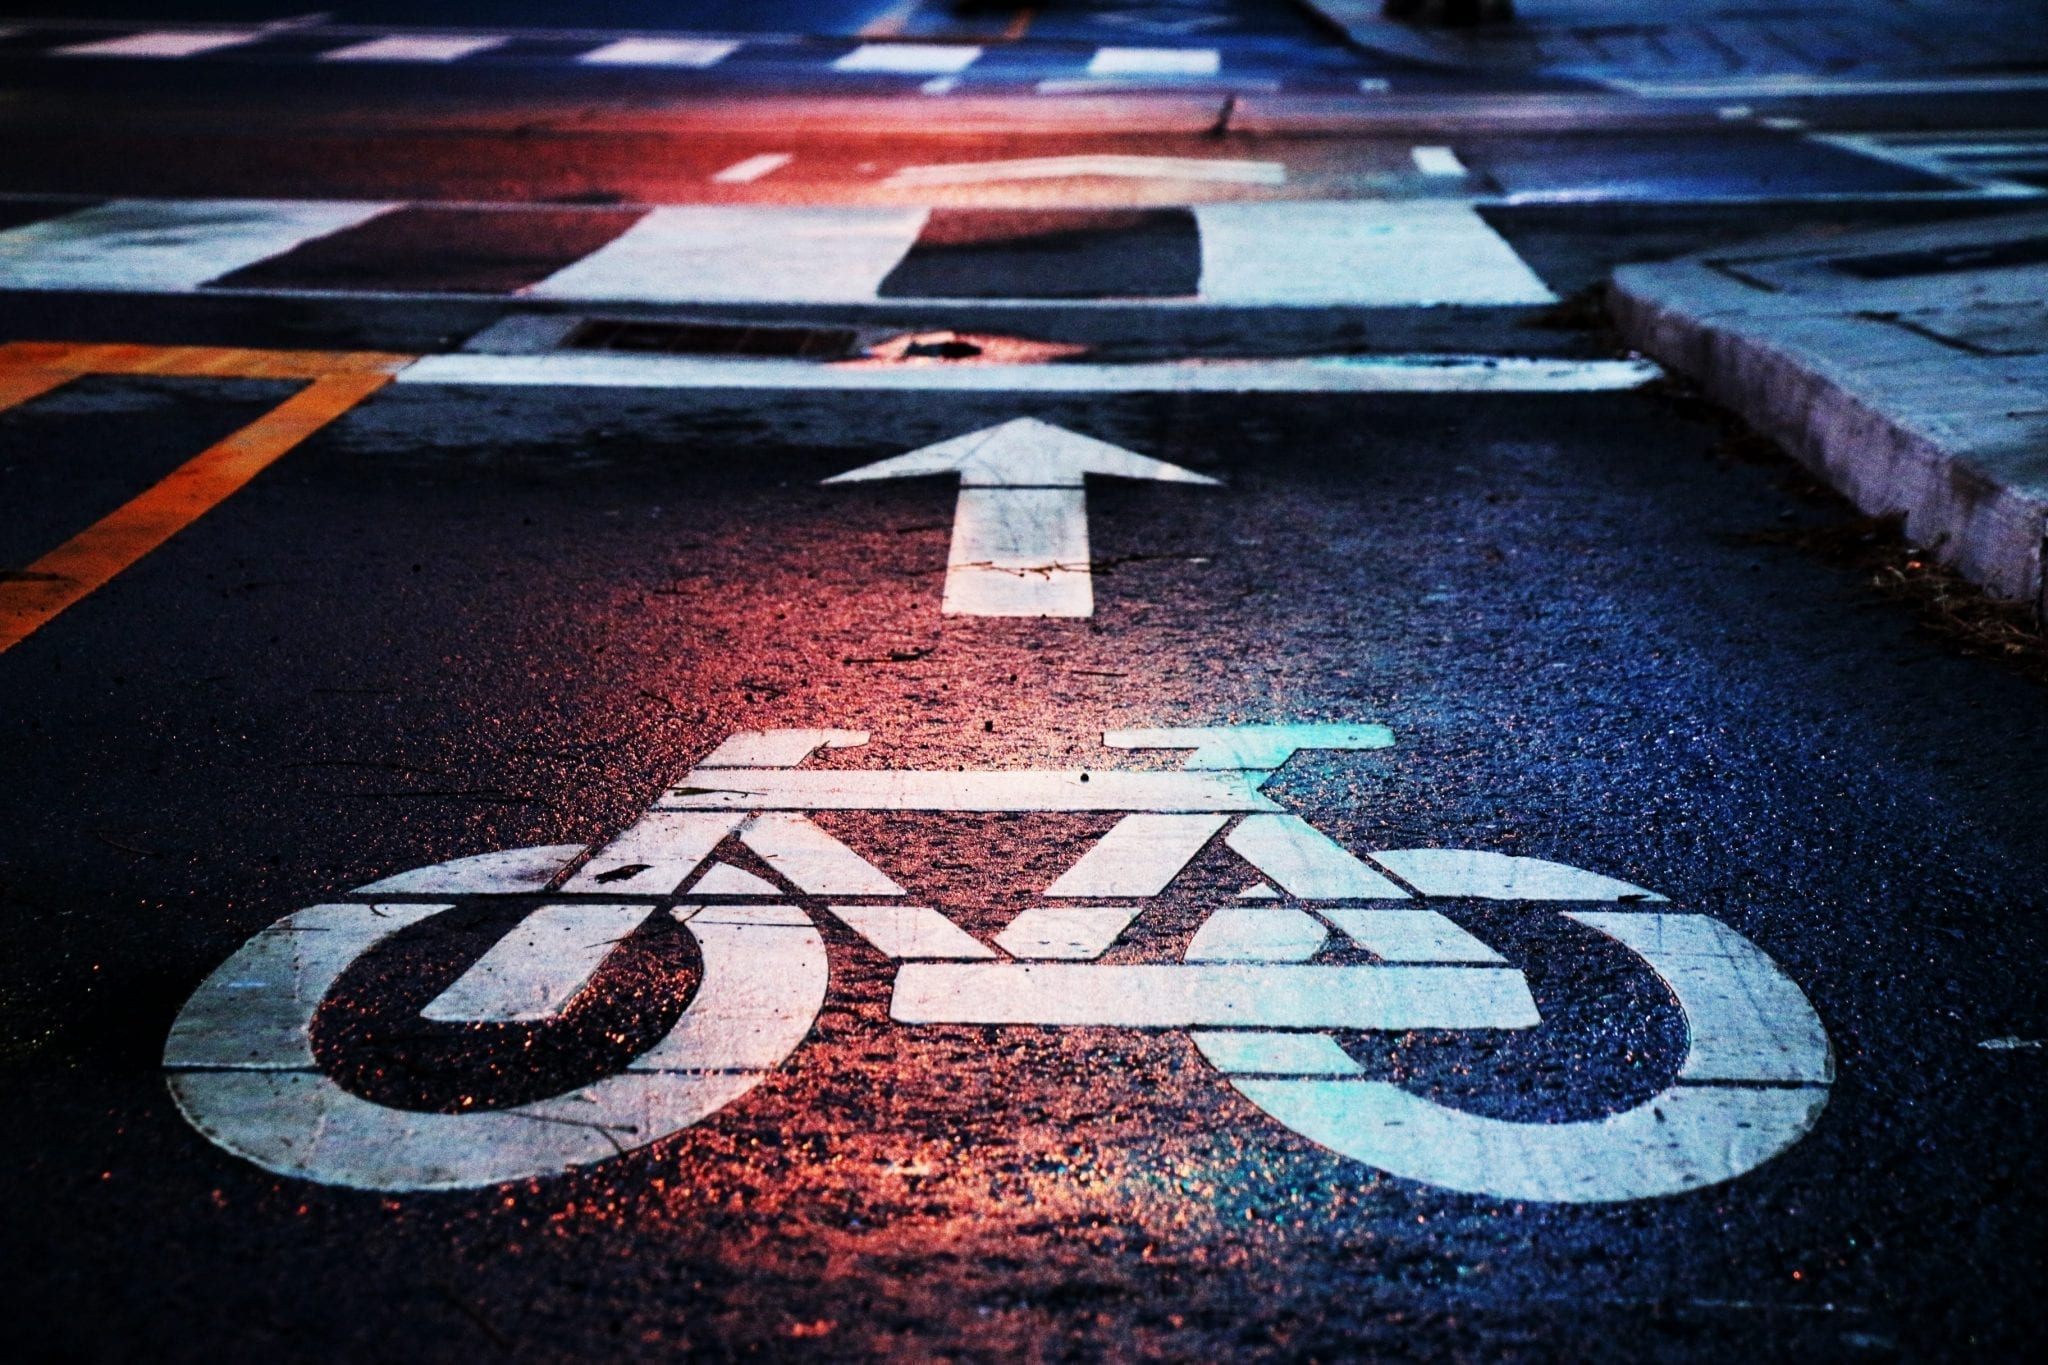 Bicycle lane marker; image by Andrew Gook, via Unsplash.com.